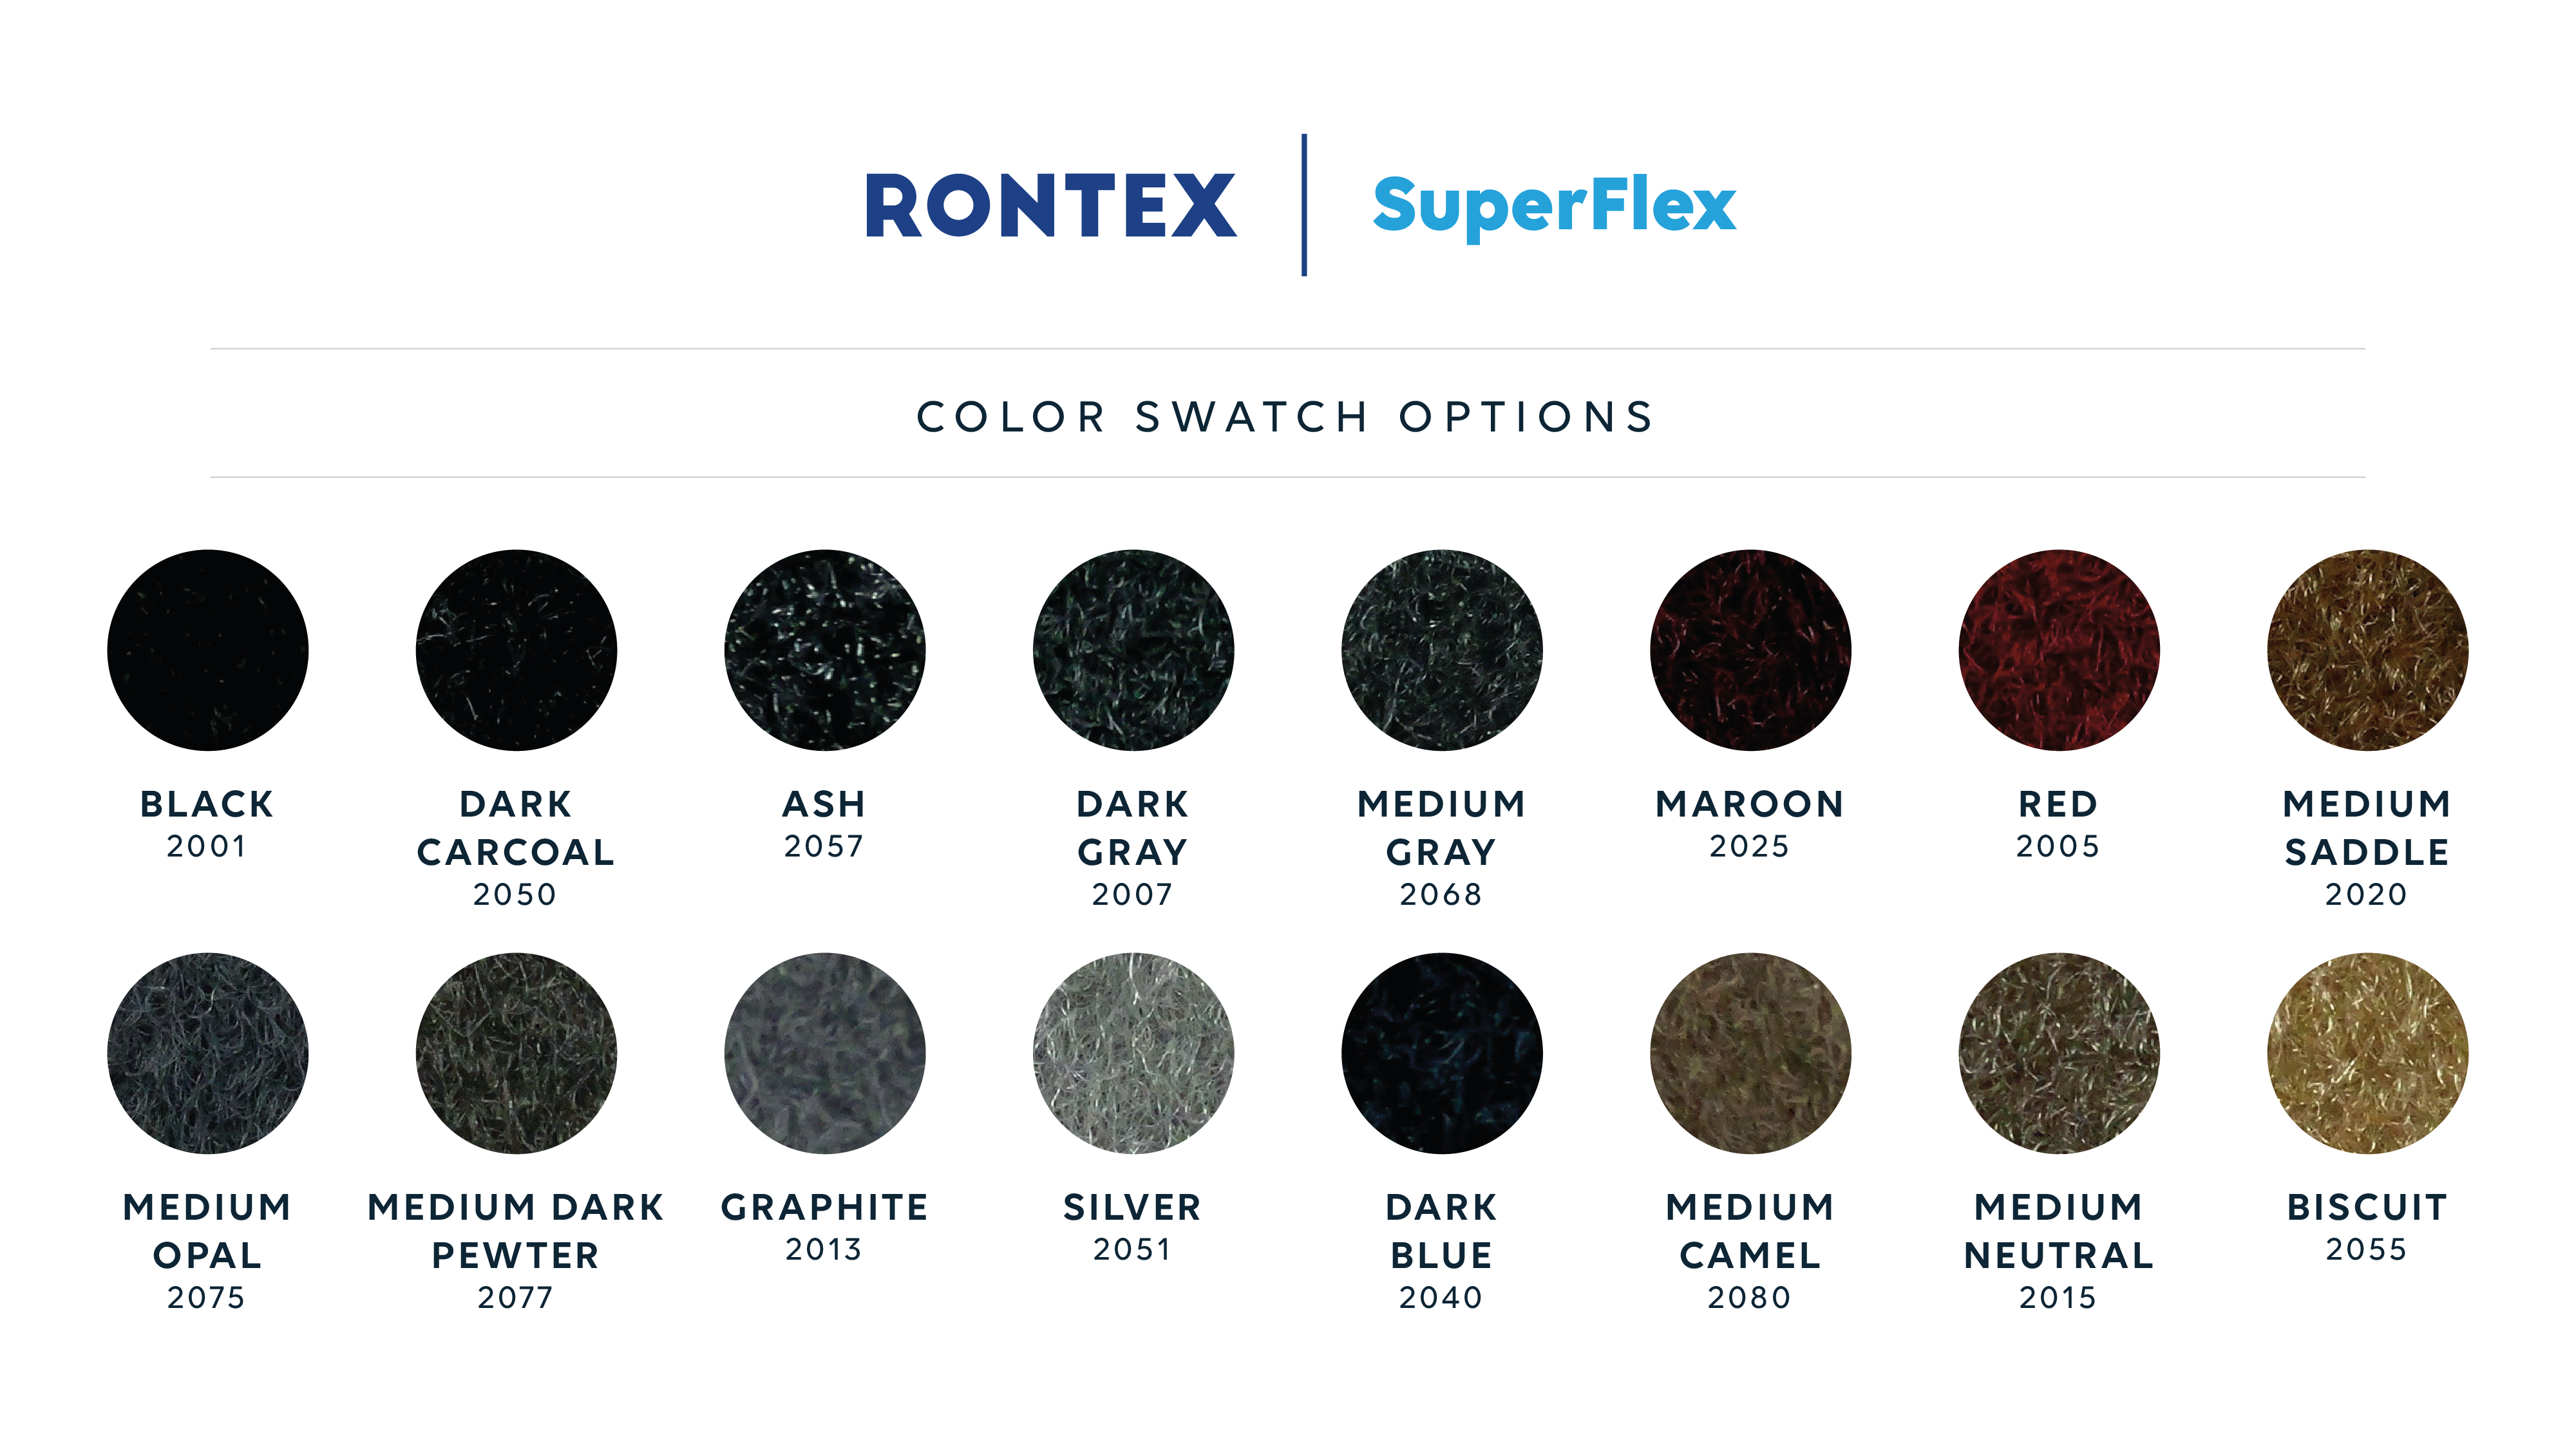 Rontex image swatches superflex